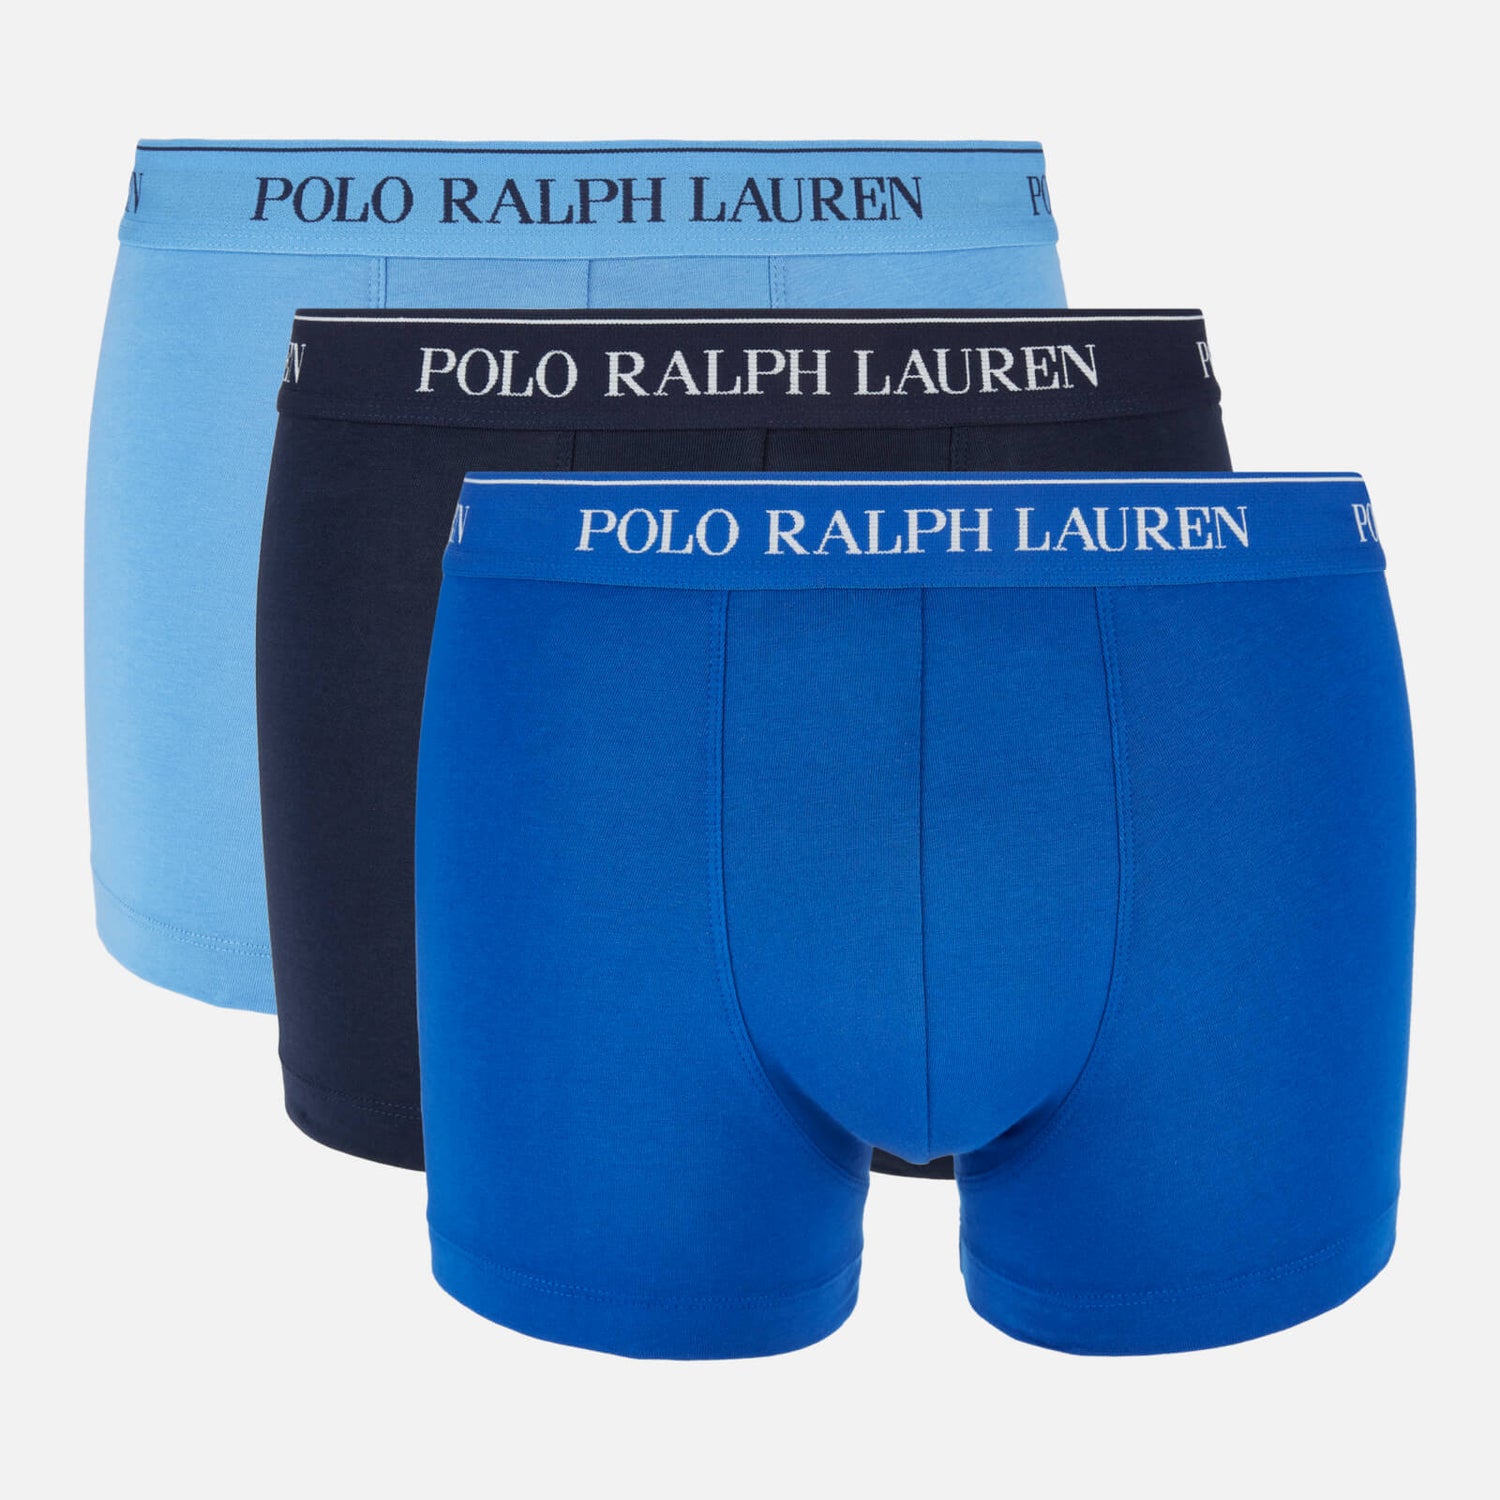 Polo Ralph Lauren Men's Classic 3 Pack Trunks - Cruise Navy/Saphire Star/Bermuda Blue - XL